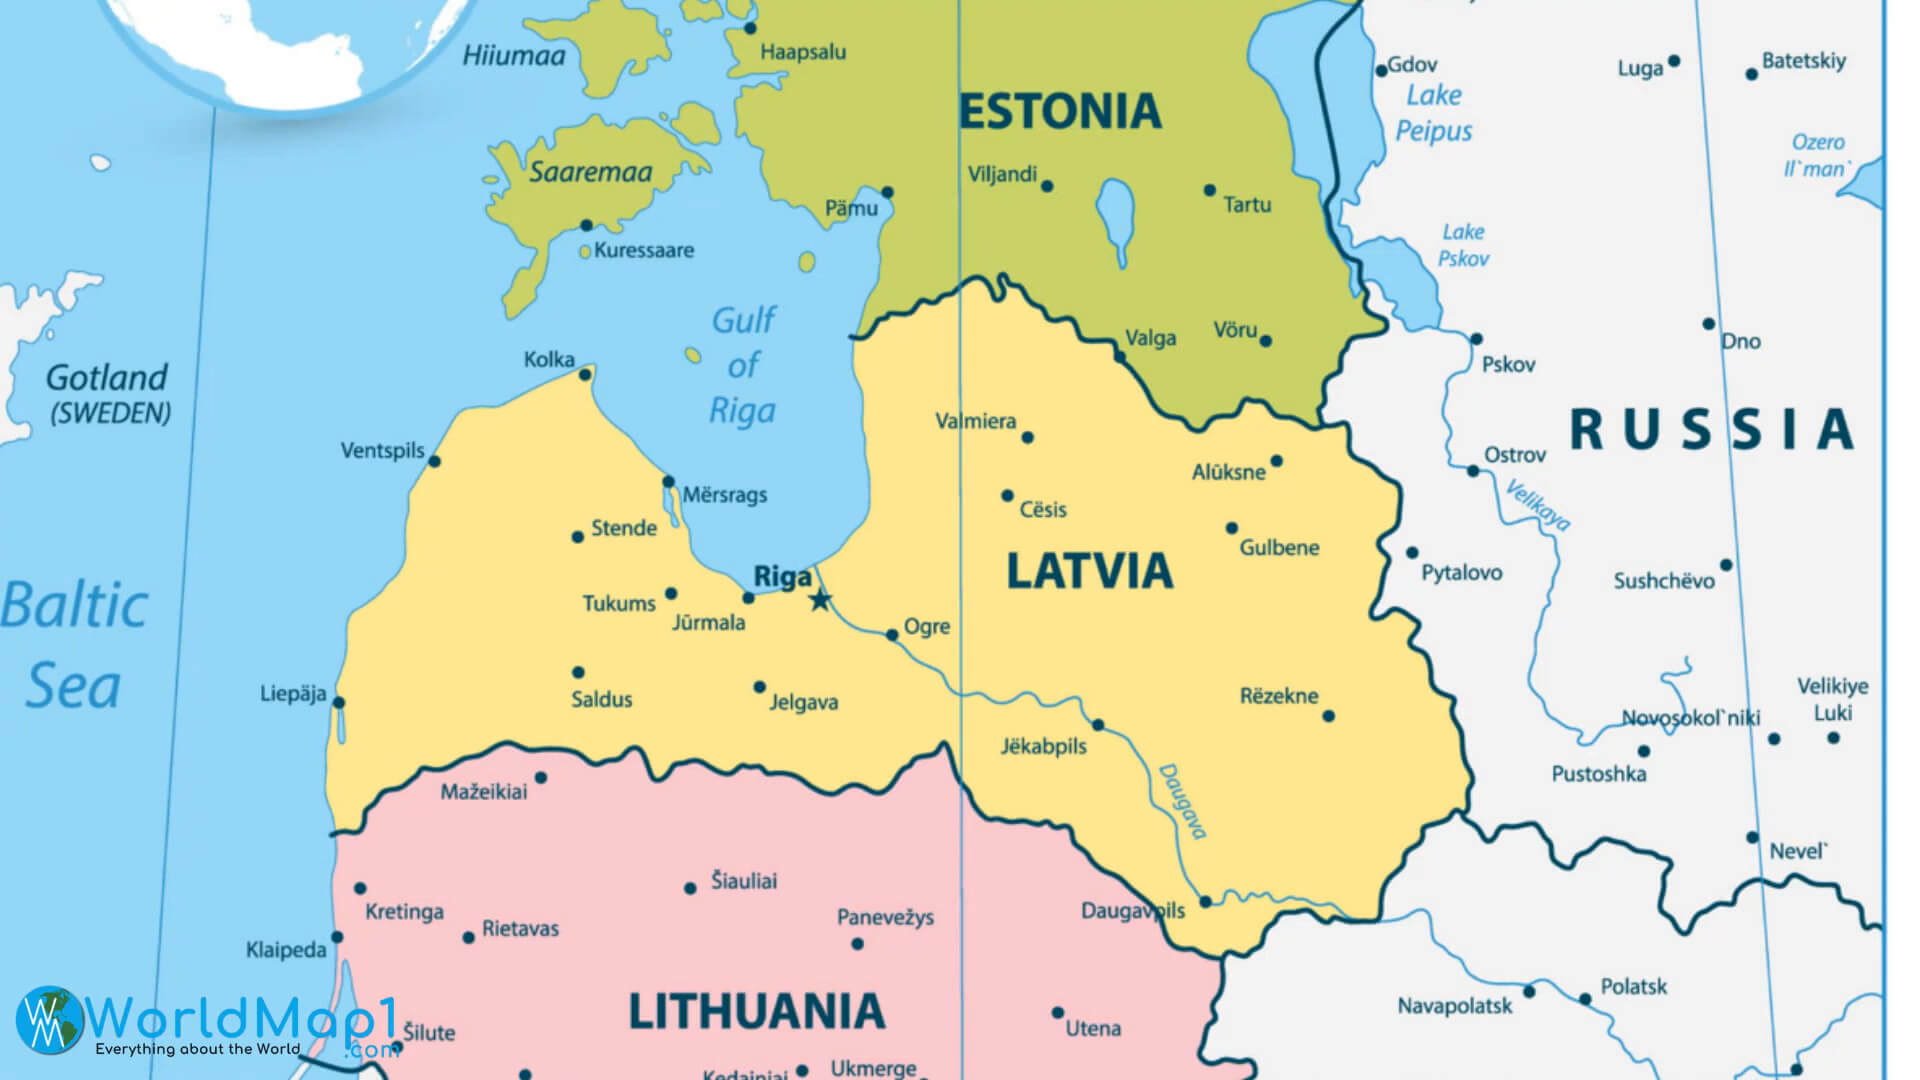 Estonia and Latvia Major Cities Map